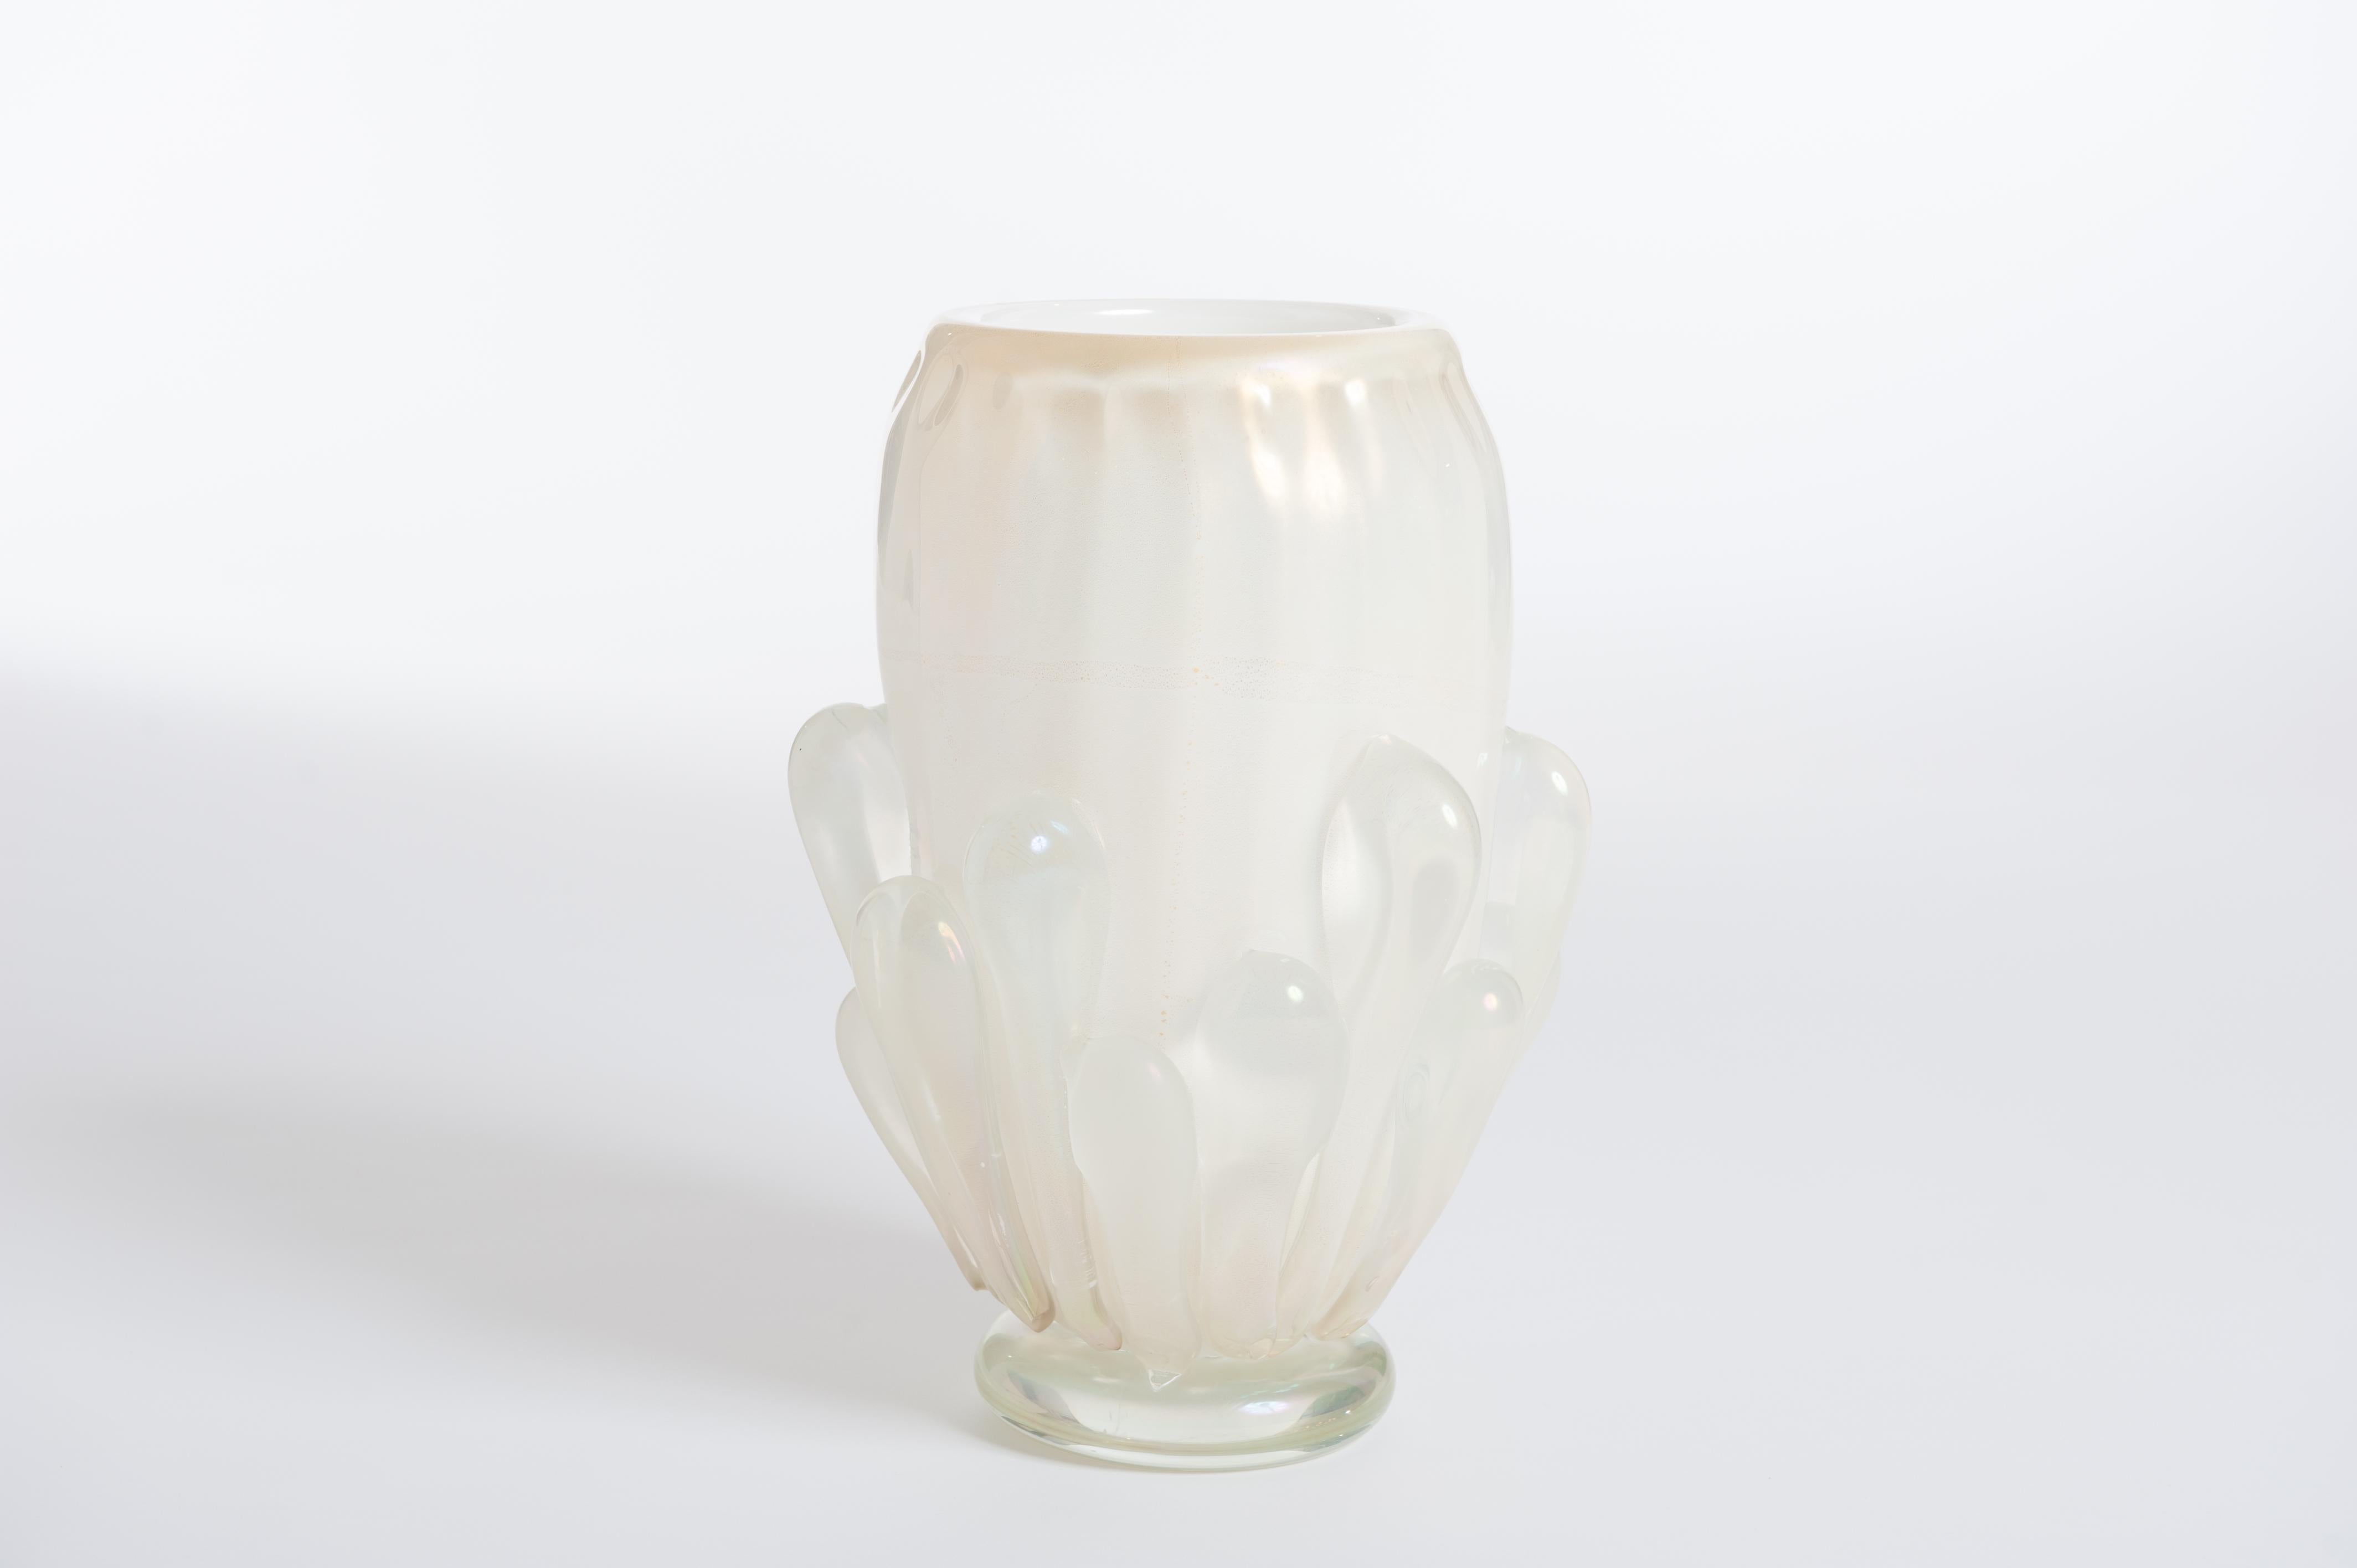 Modern Pair of Mid-Century Italian Golden-White Murano Glass Vases by Constantini 1980s For Sale